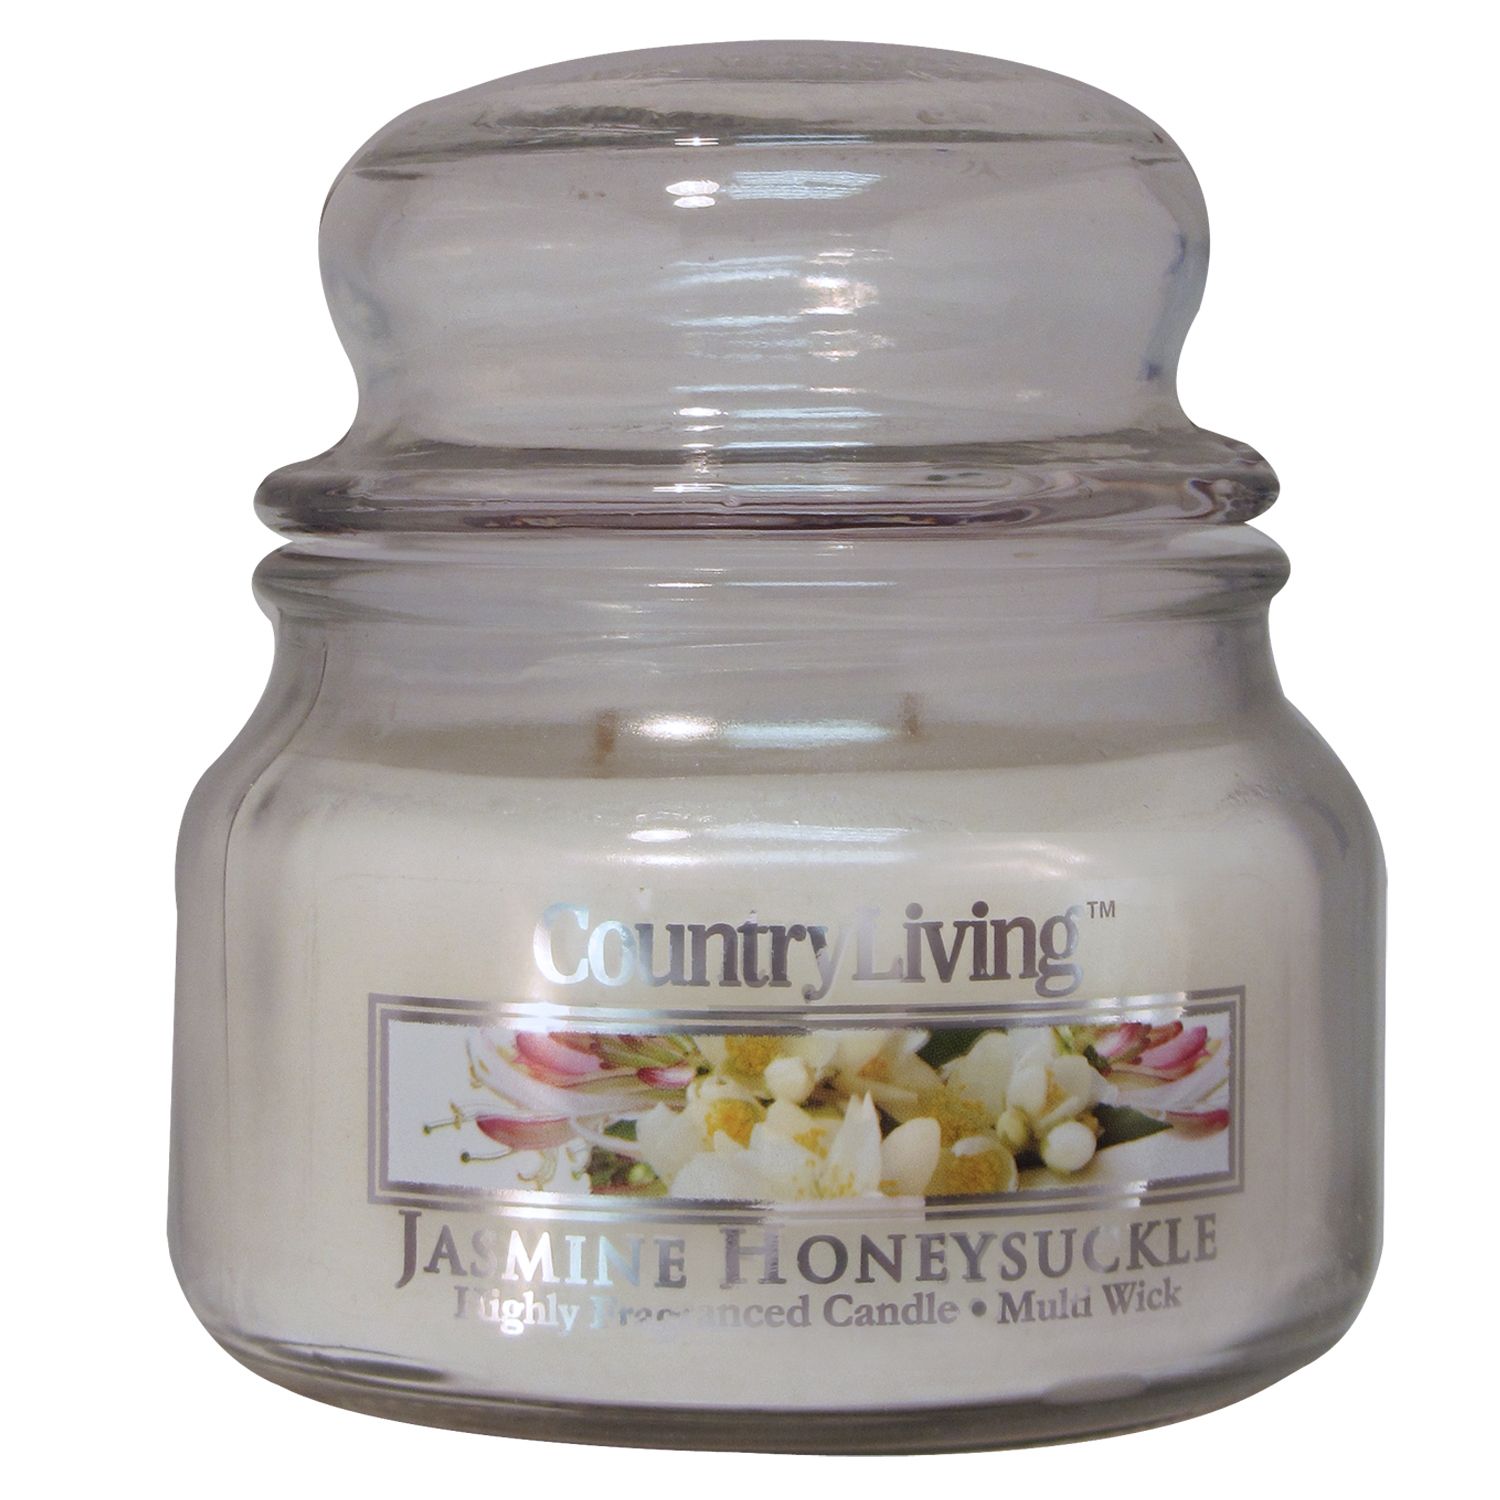 Country Living 9oz Jar Candle - Jasmine Honeysuckle